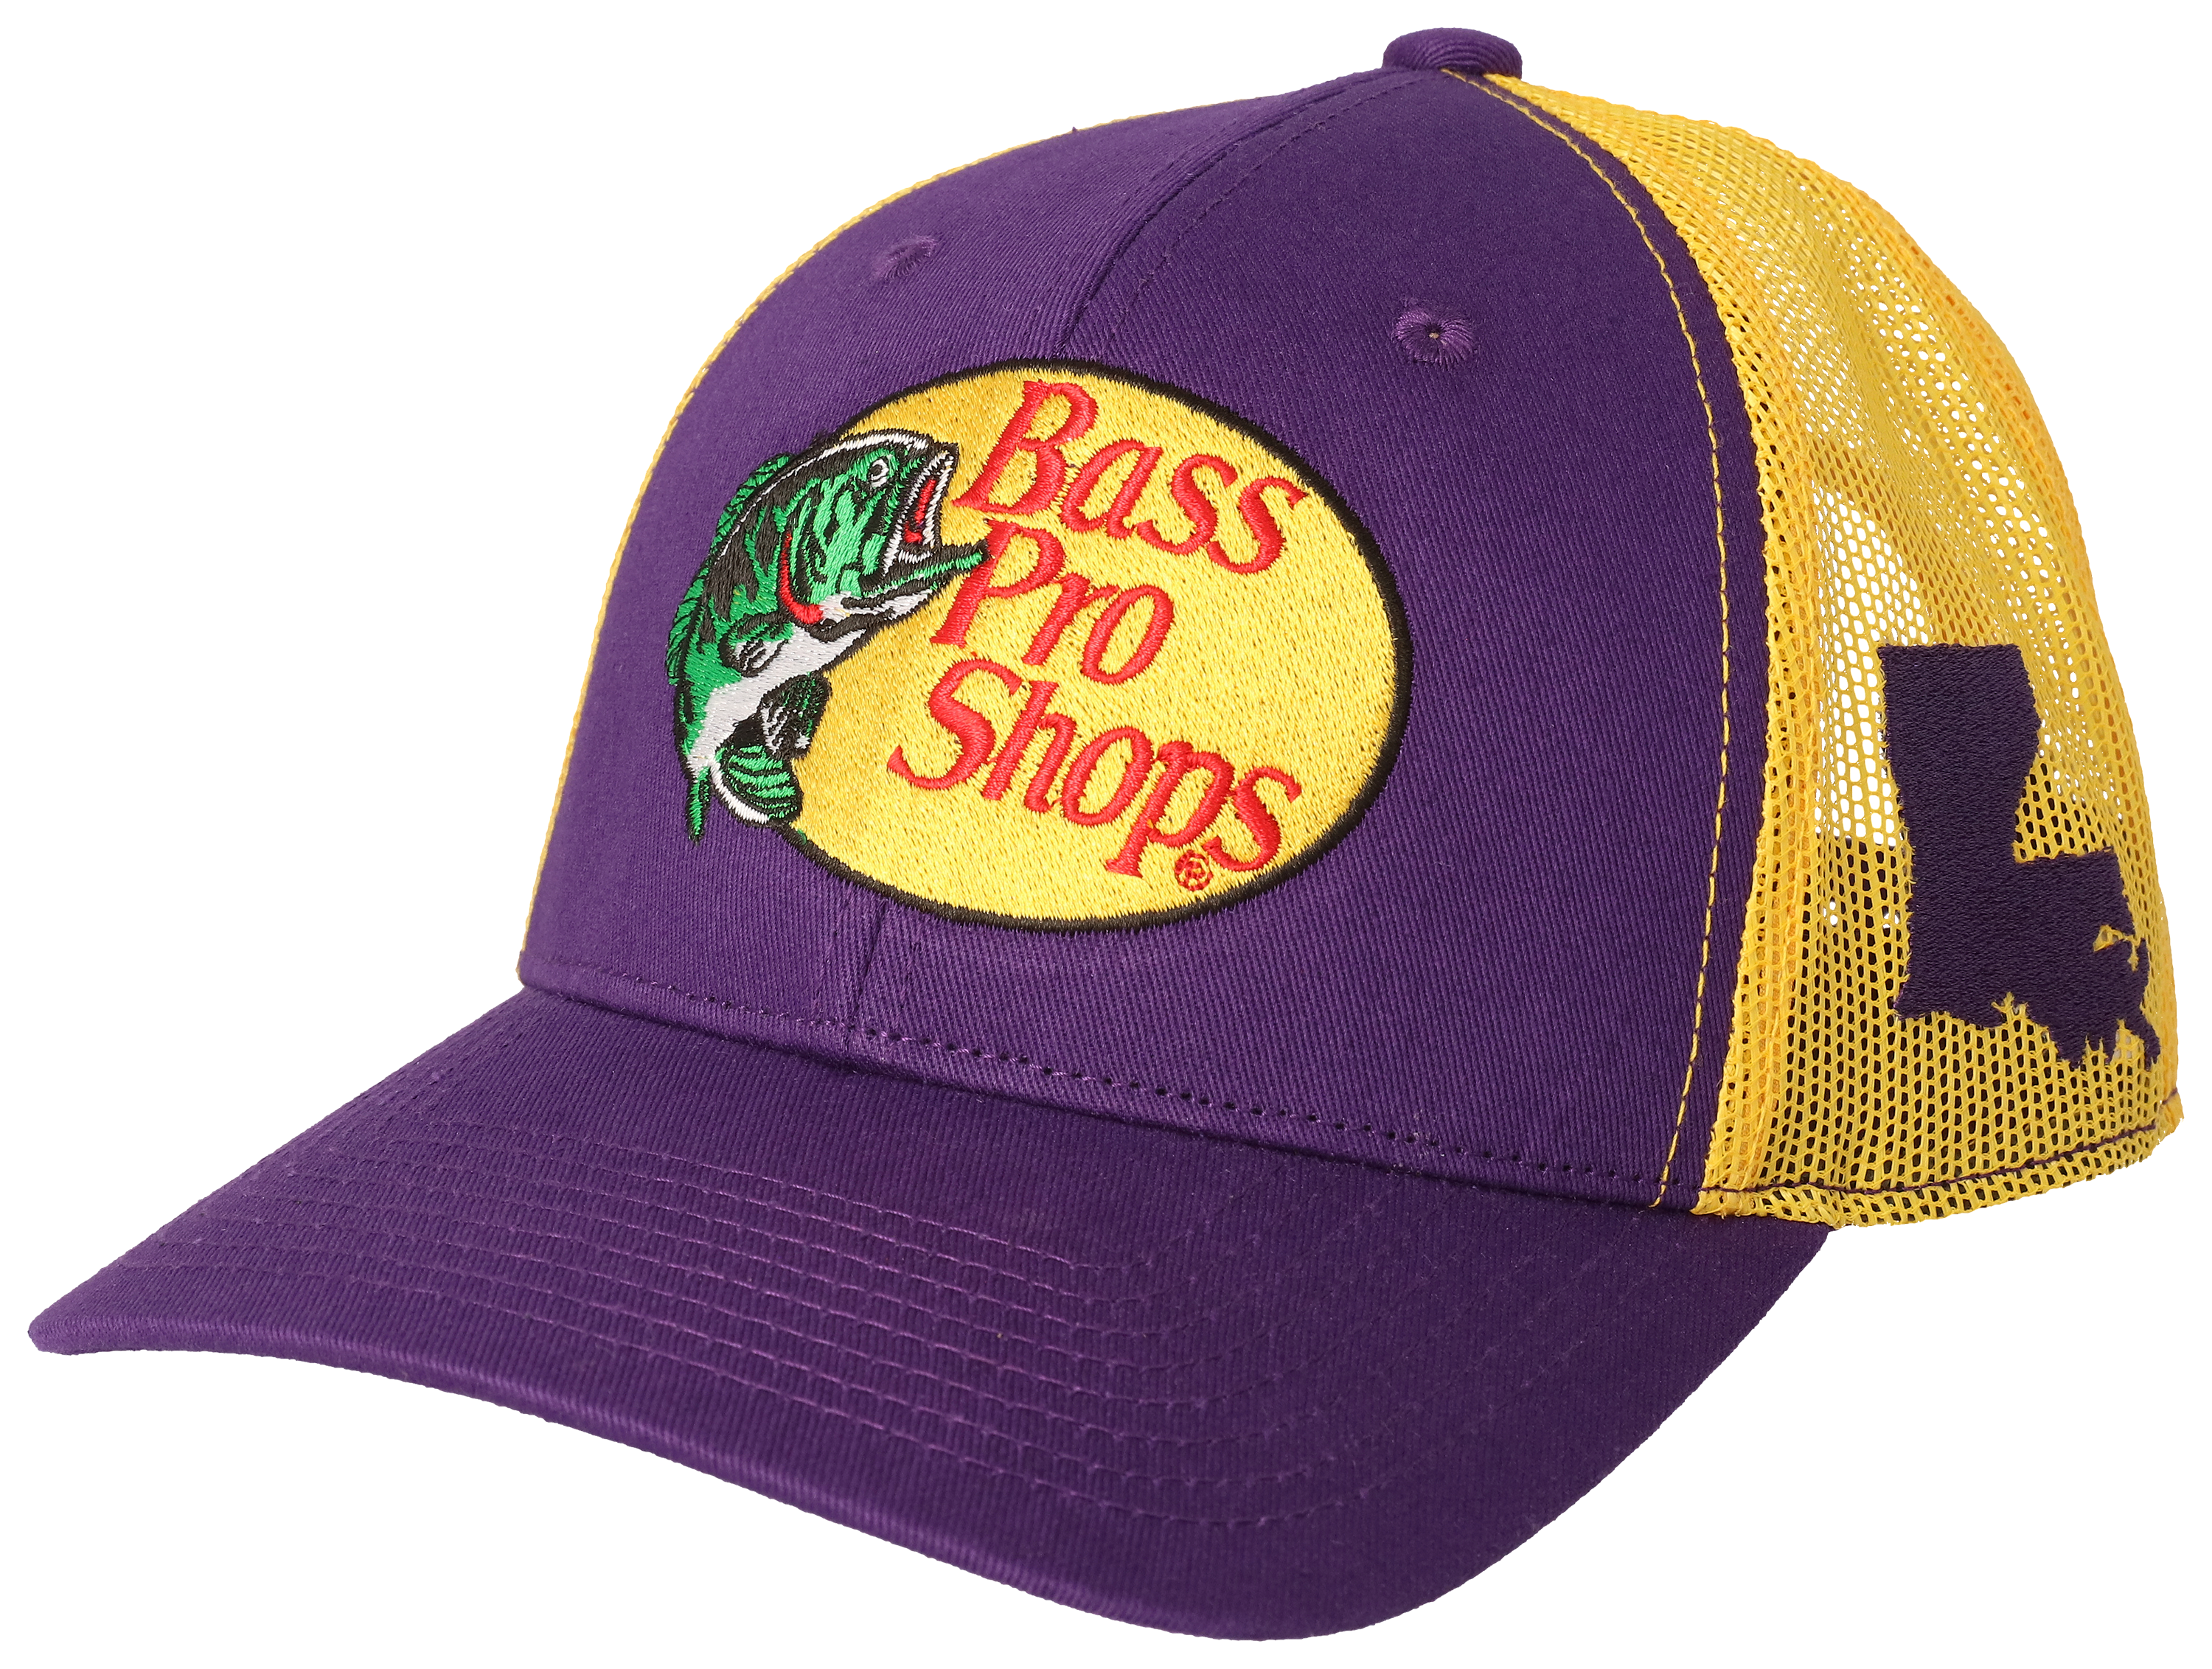 Bass Pro Shops Woodcut Logo and Louisiana Patch Snapback Cap